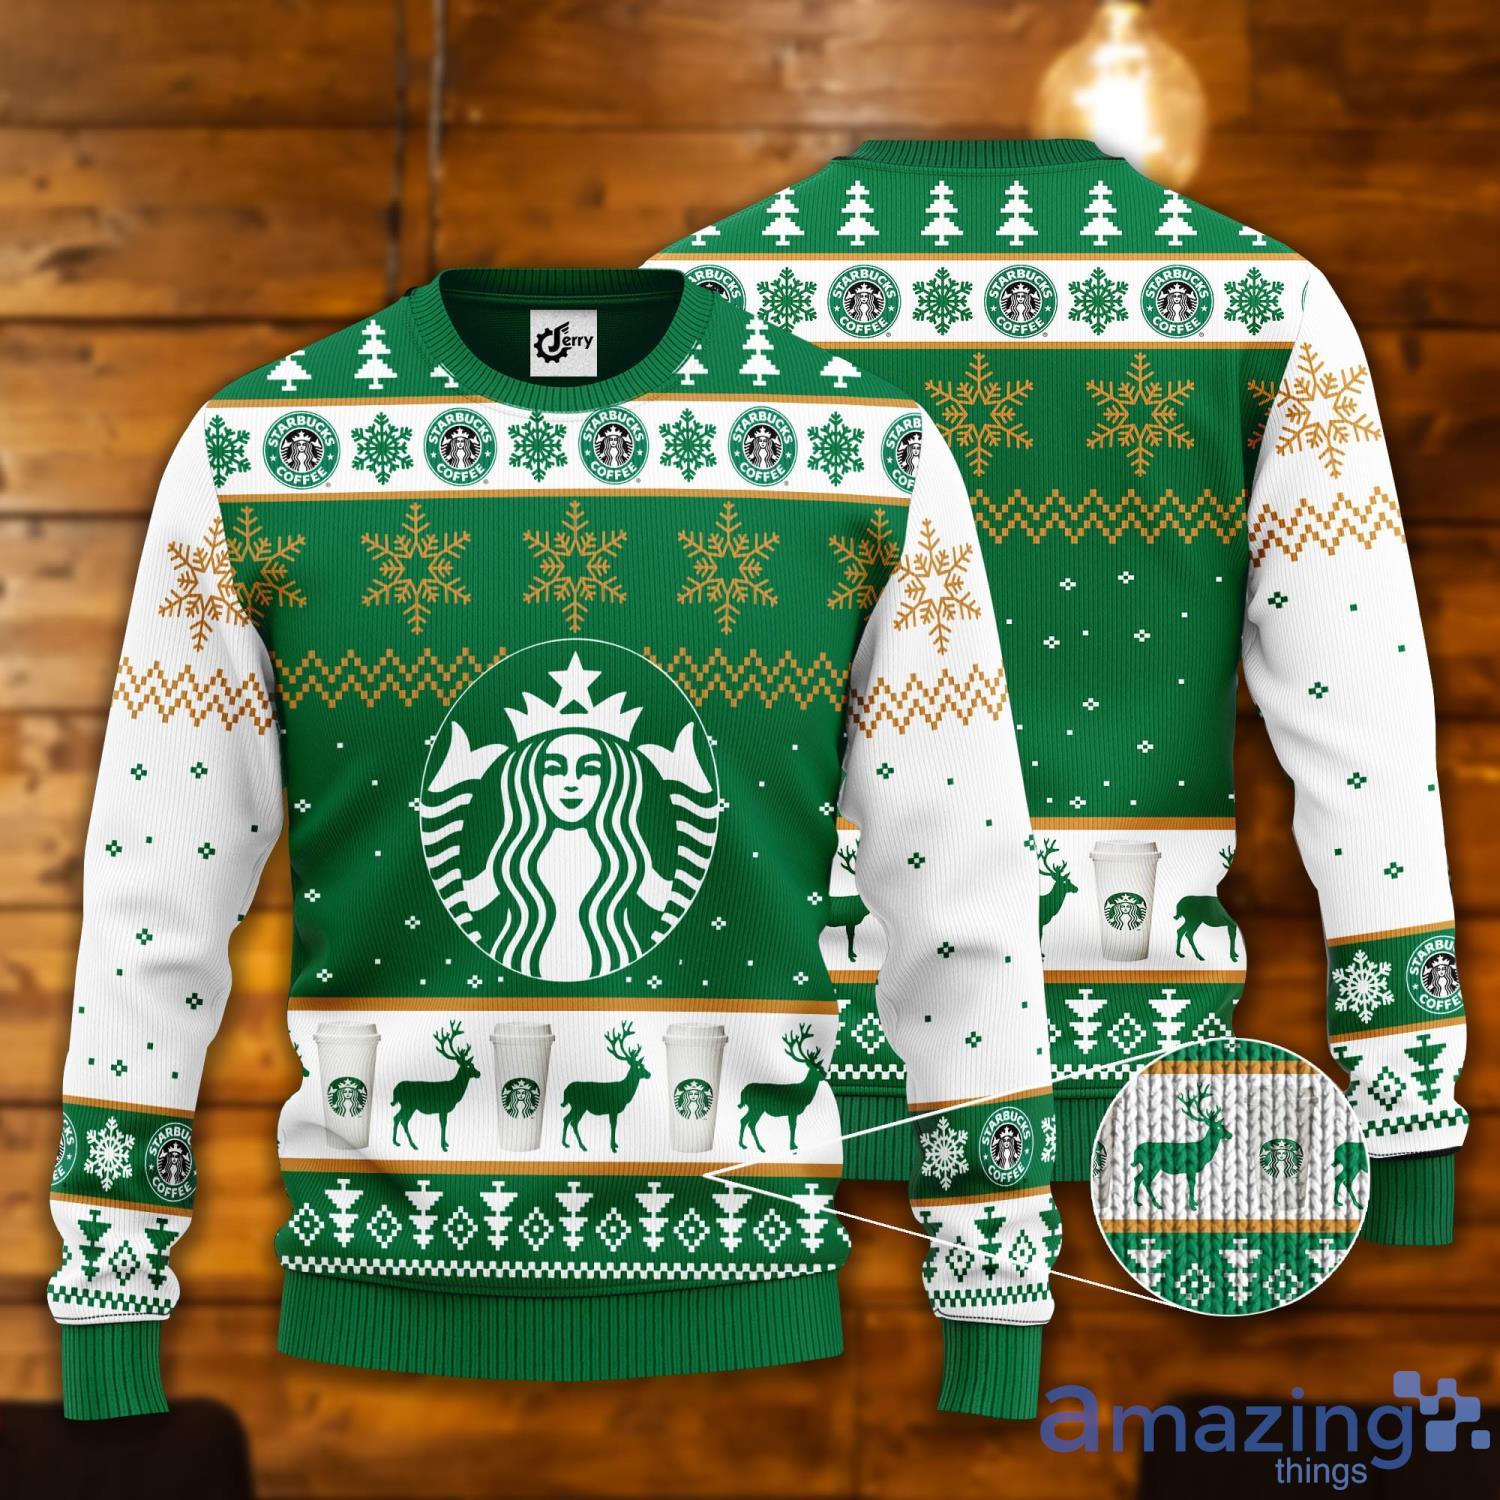 San Francisco Giants Starbucks coffee logo shirt, hoodie, sweater